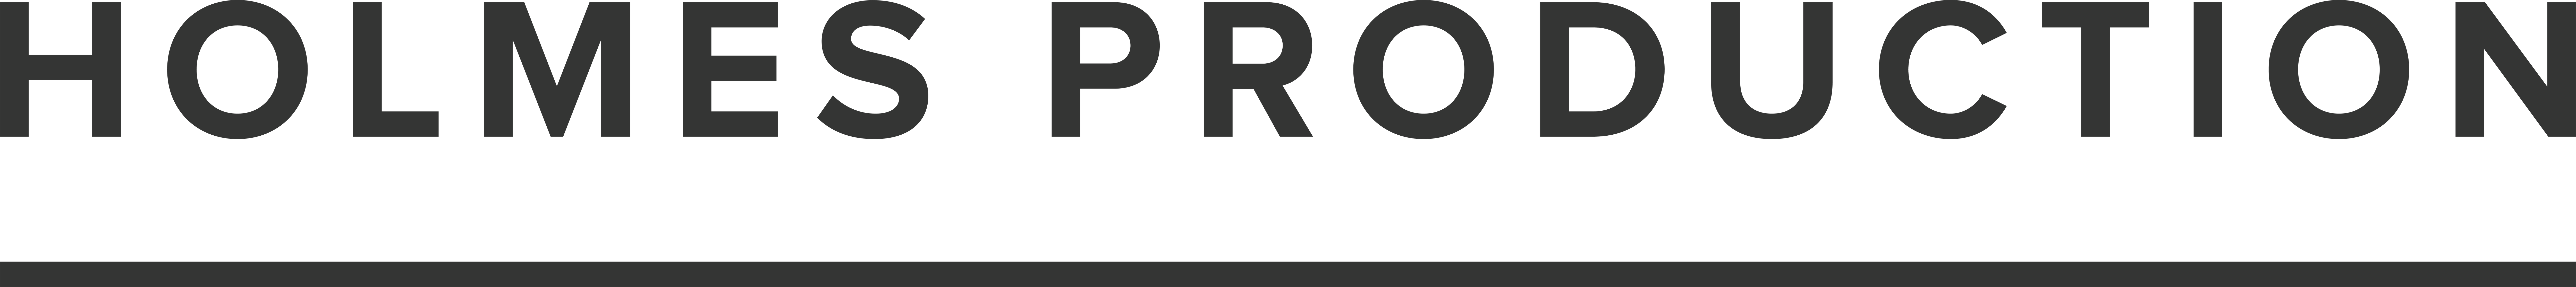 logo for Holmes Production Ltd